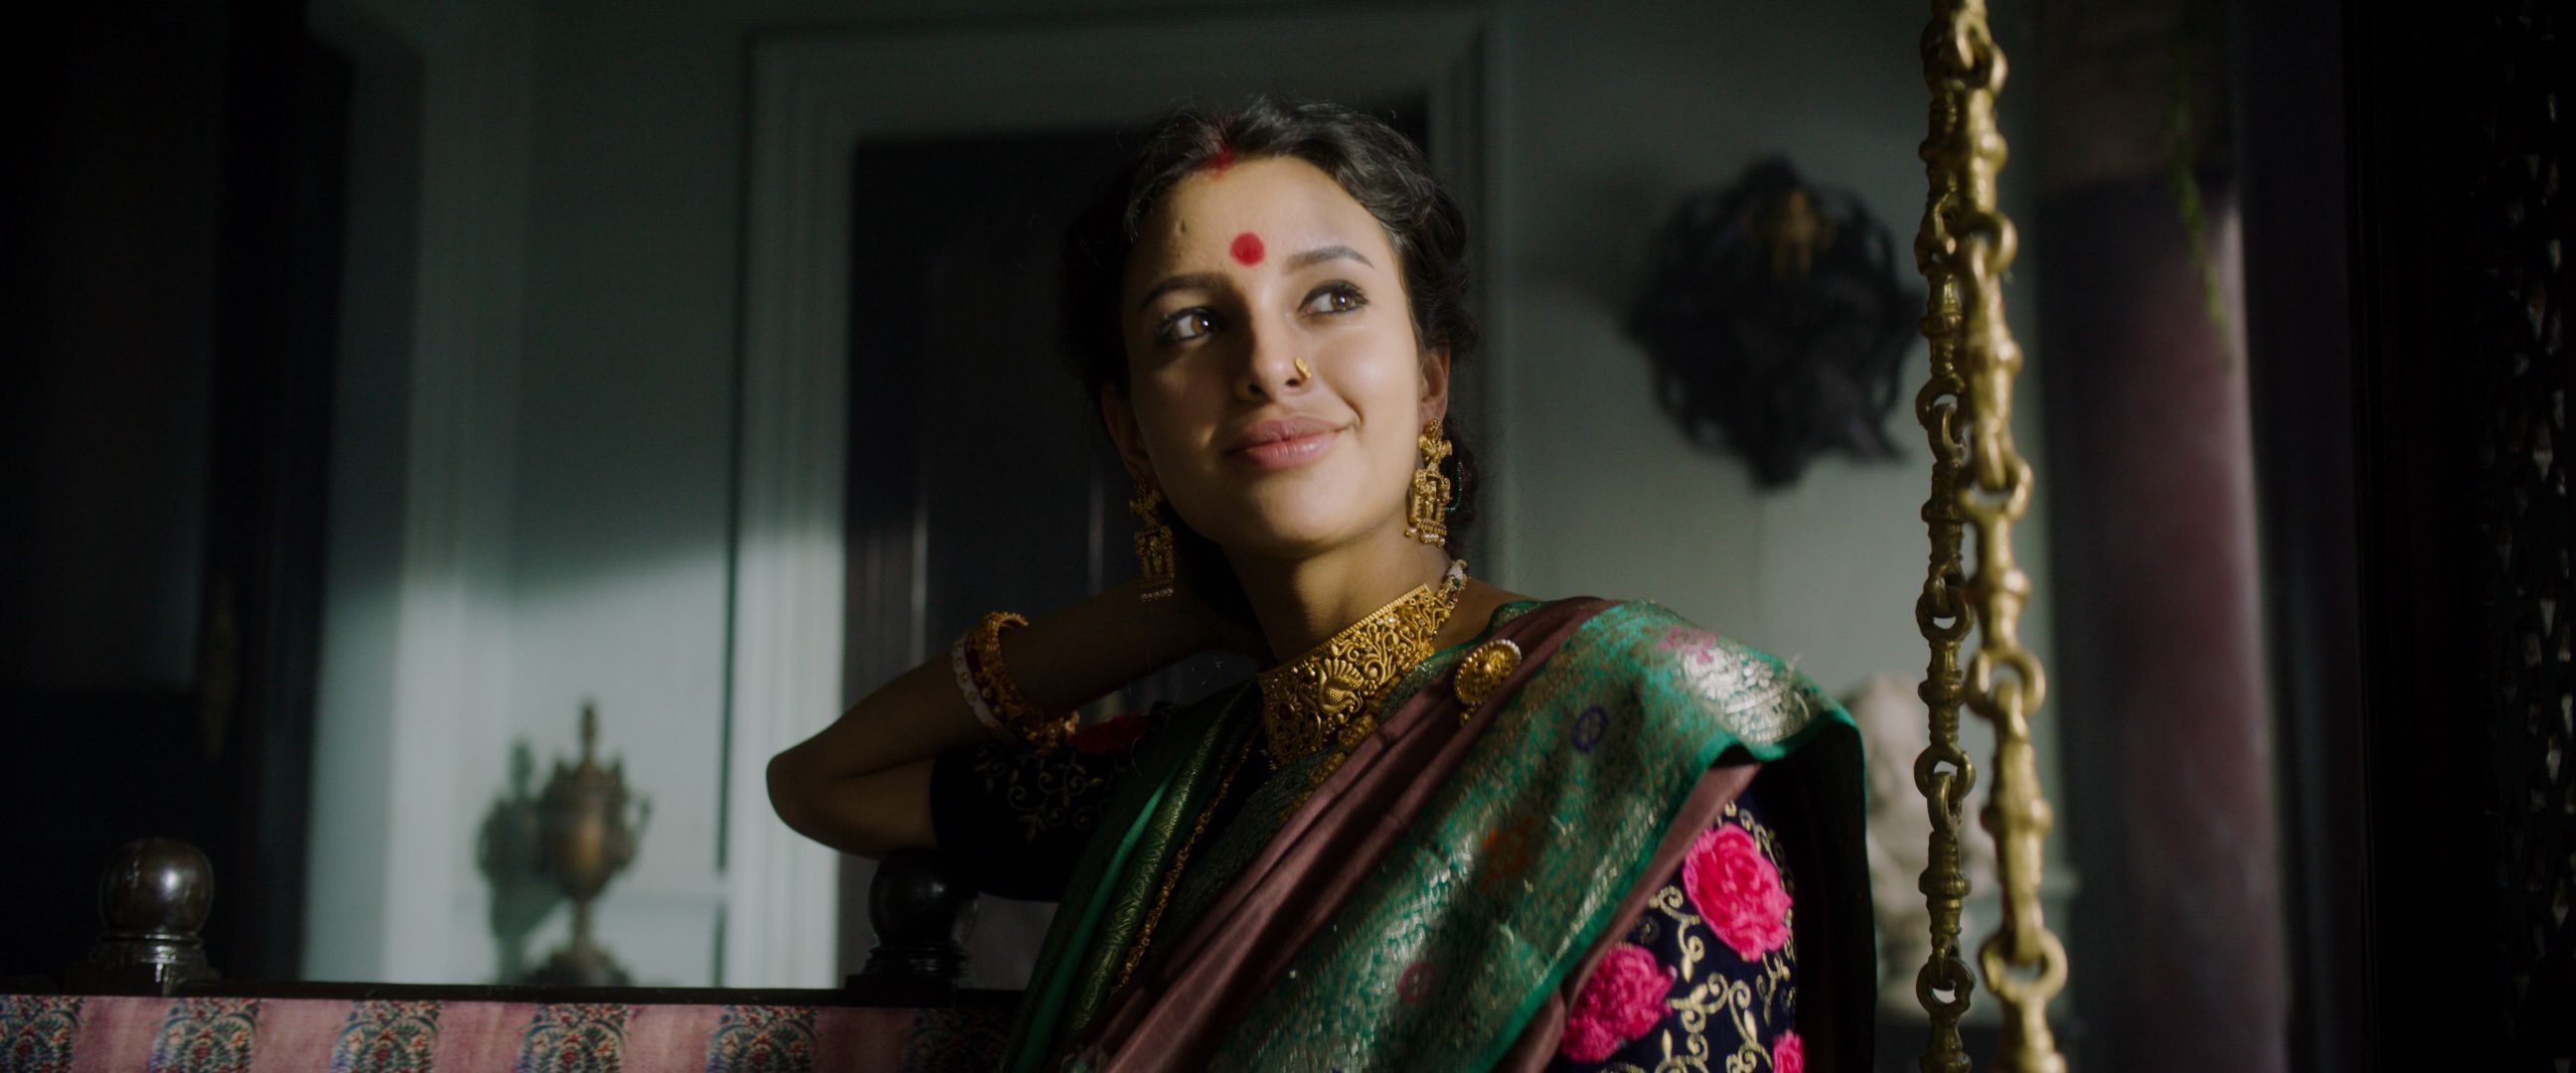 Трипти димри. Трипти Димри индийская актриса. Tripti Shankhdhar.